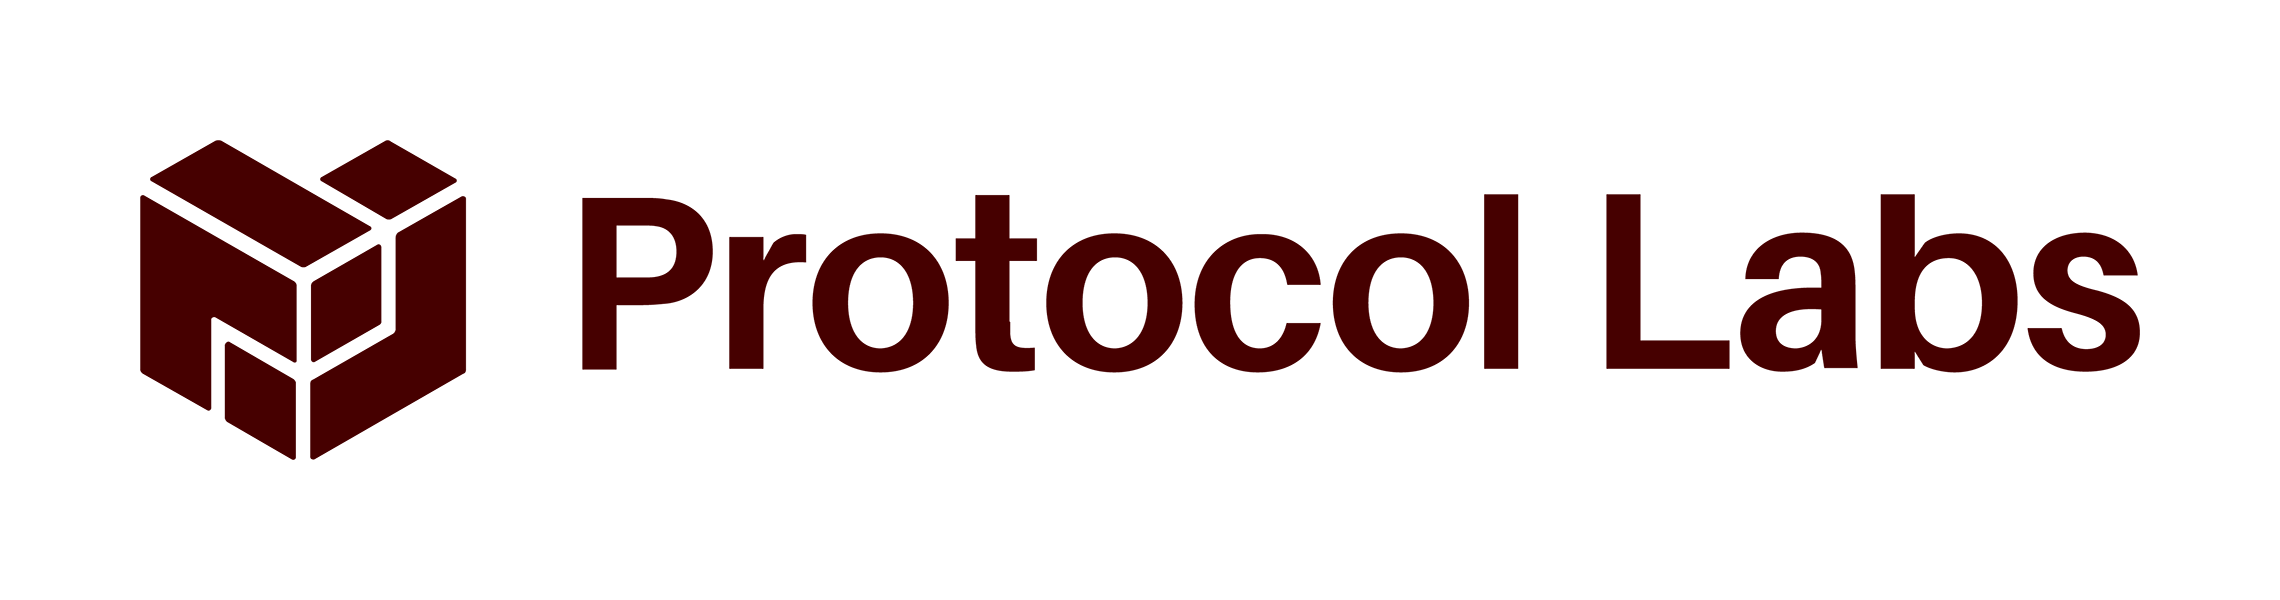 Protocol Labs Logo